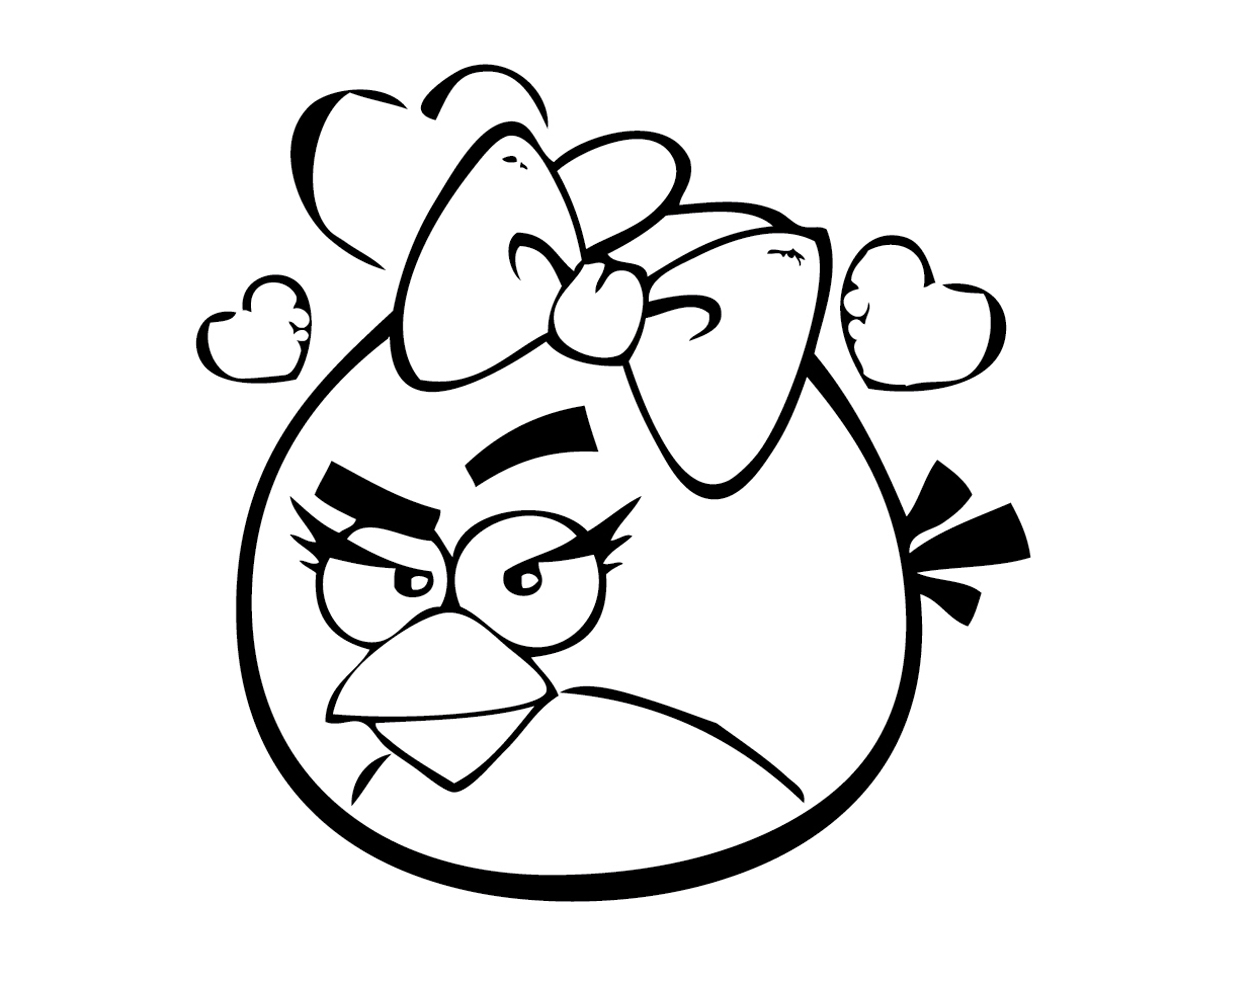 Image de plusieurs personnages d'Angry Birds